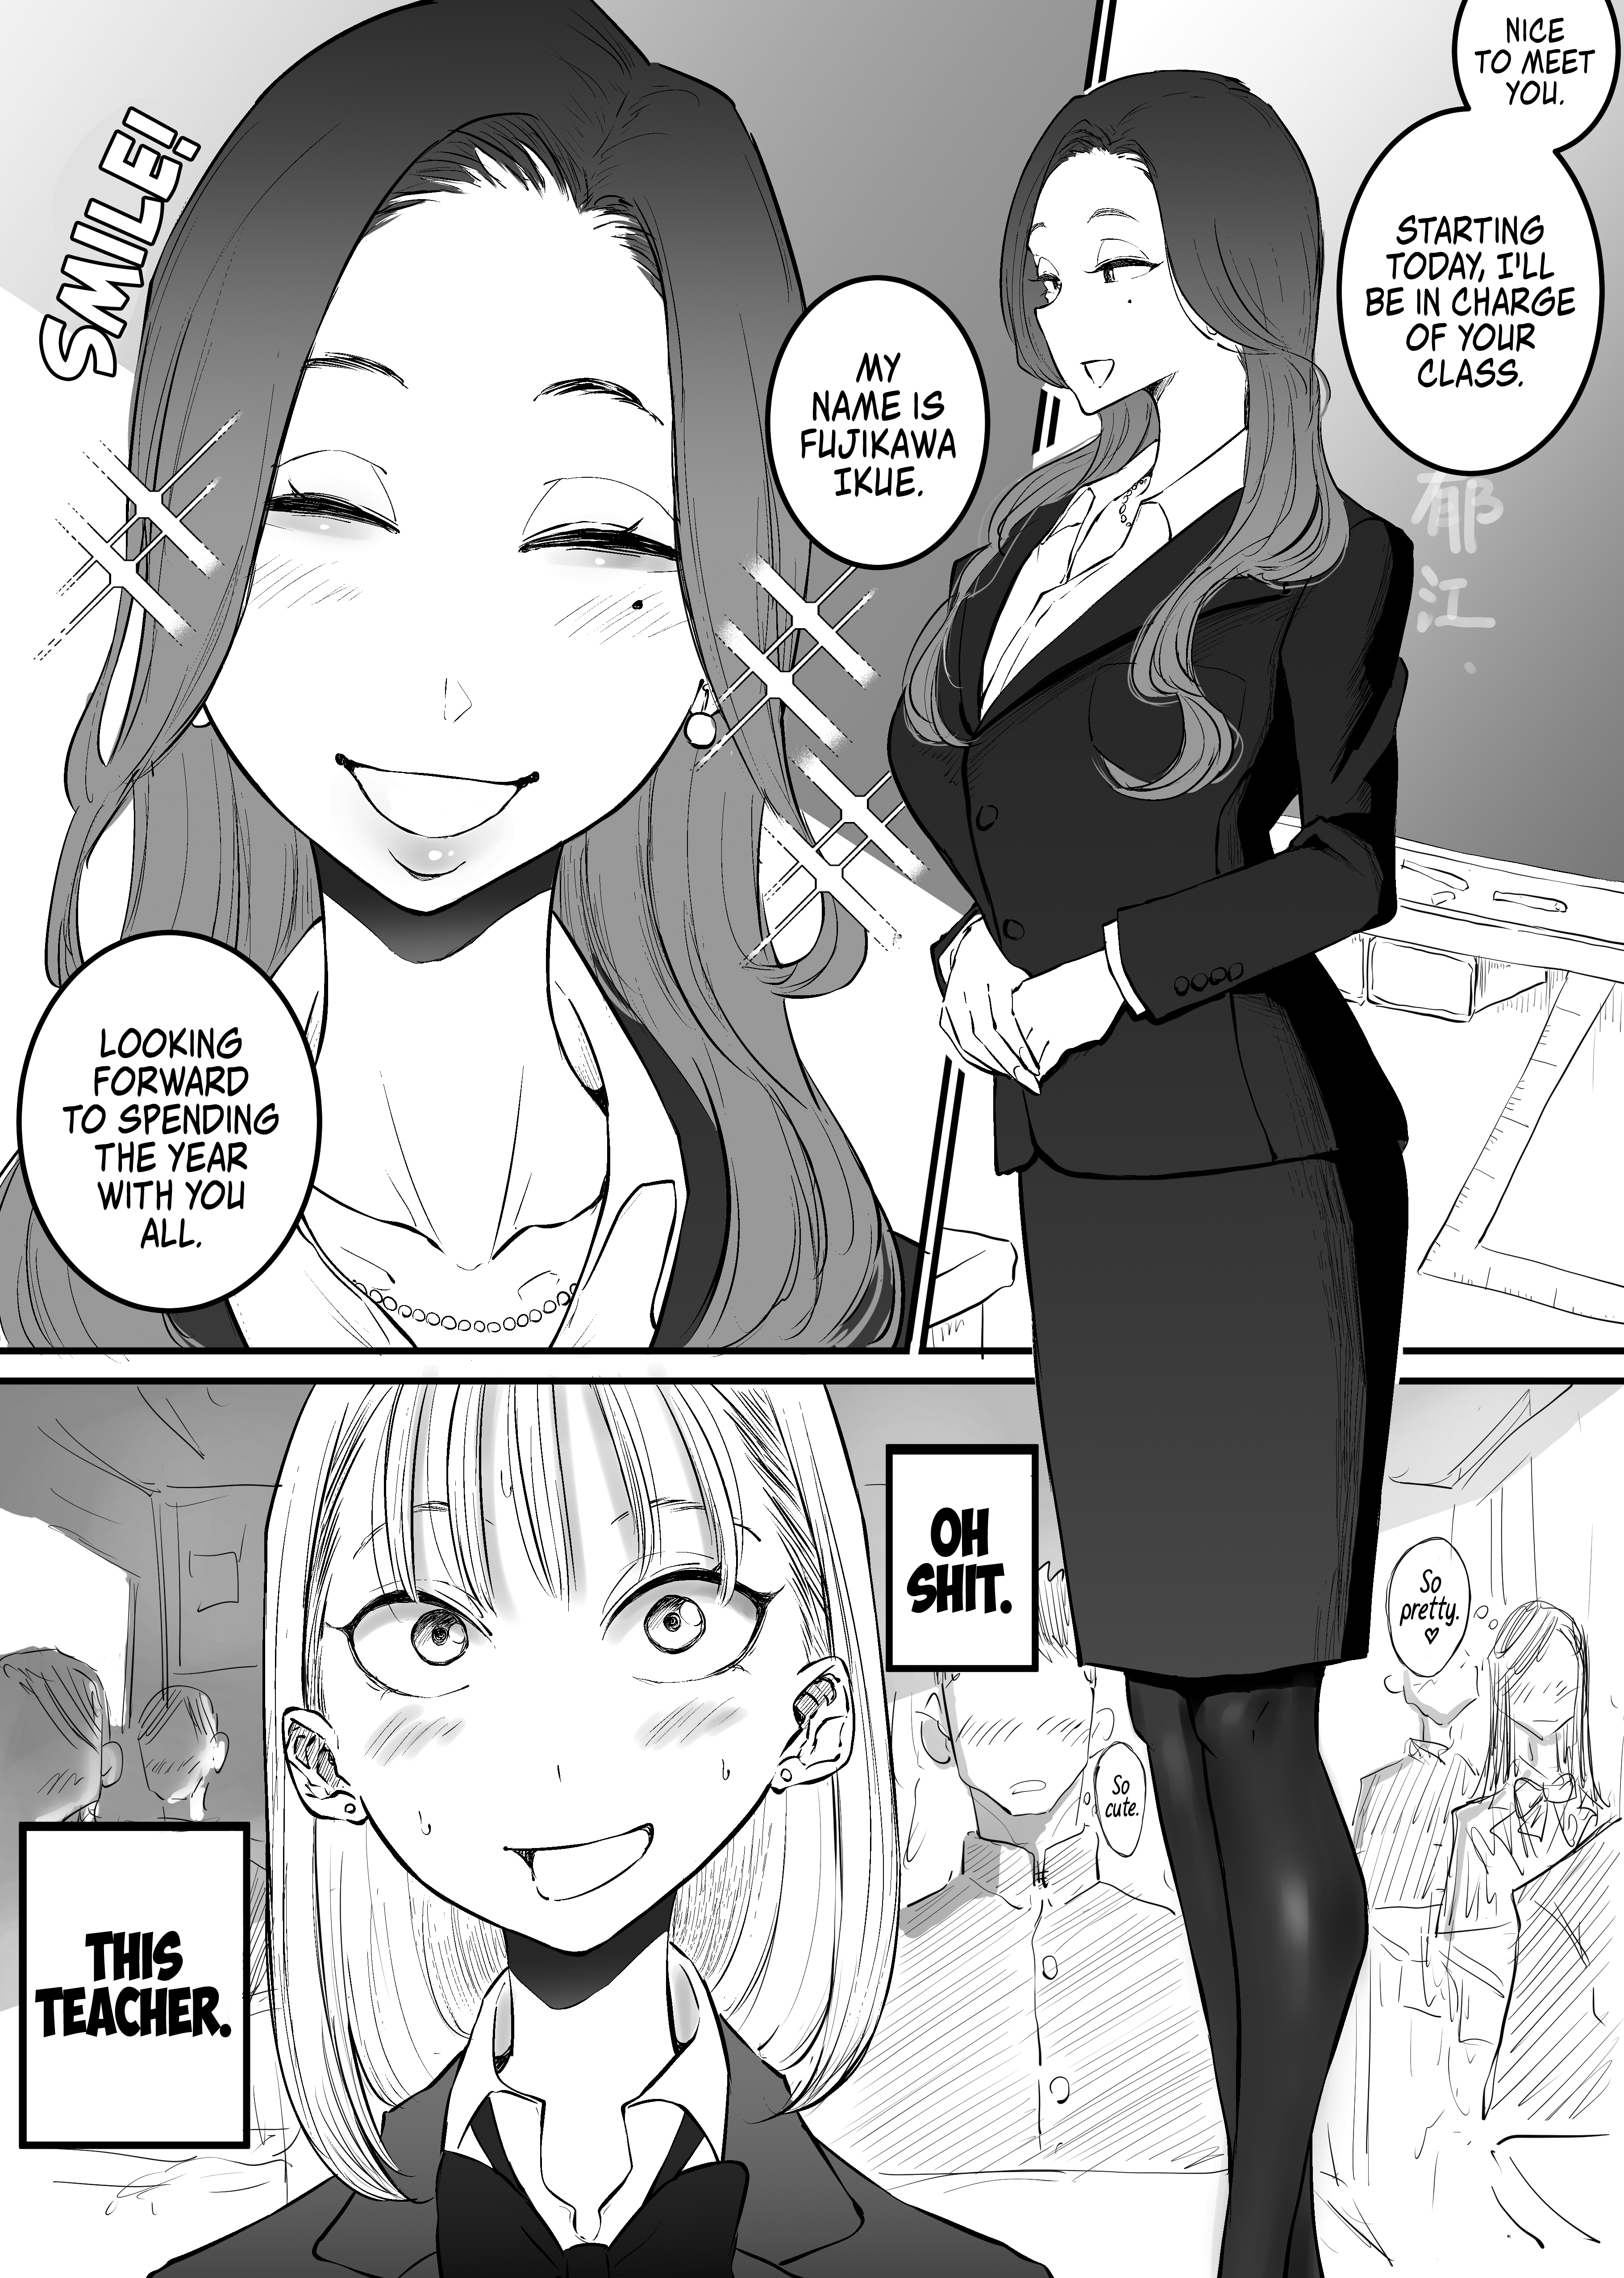 The New Homeroom Teacher Who Did XXX... manga